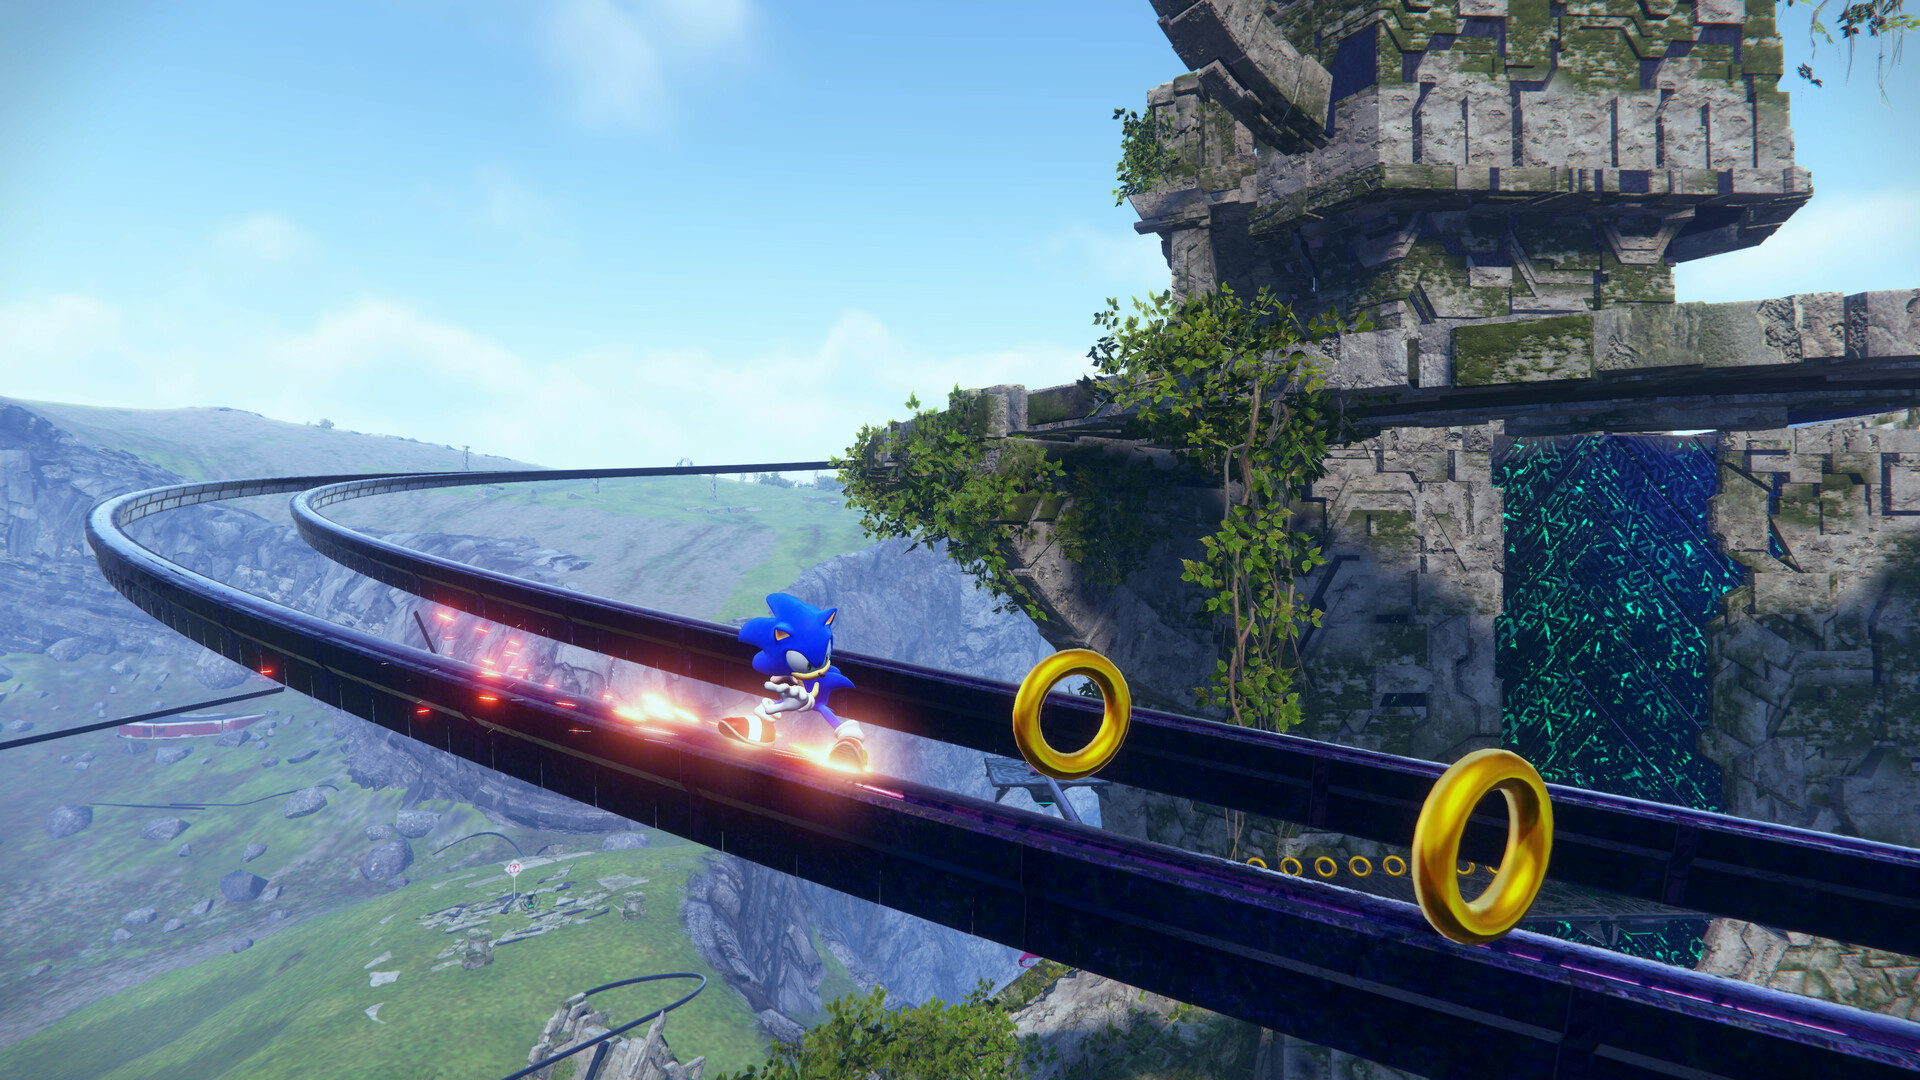 Sonic Frontiers Steam Altergift